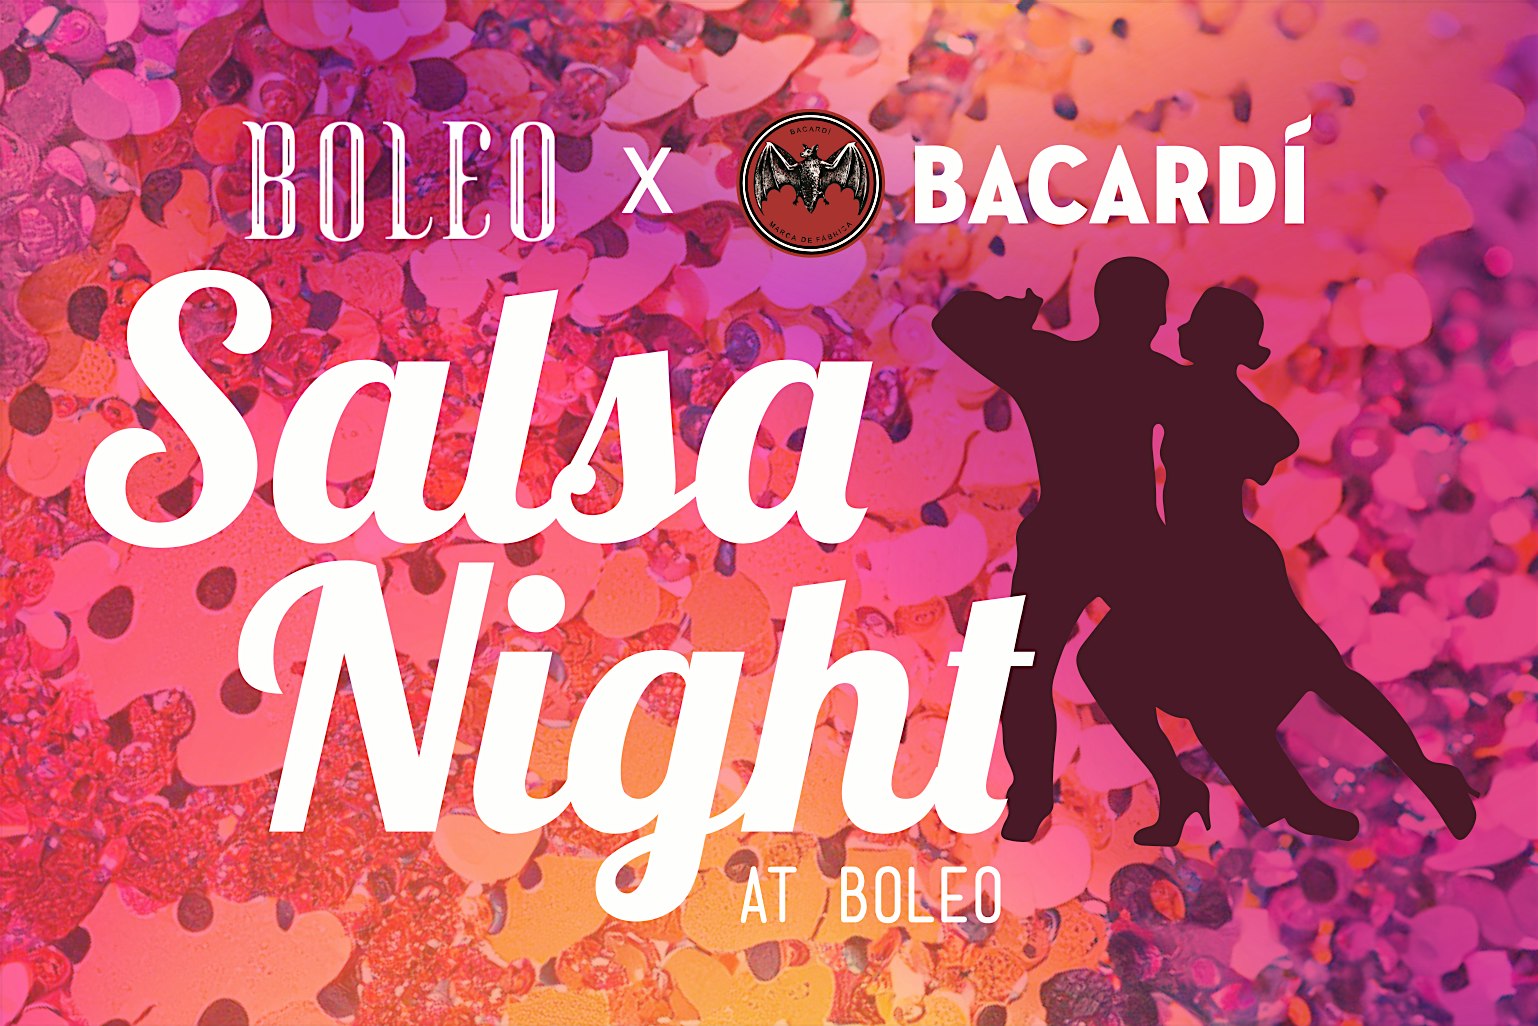 Salsa Night at Boleo